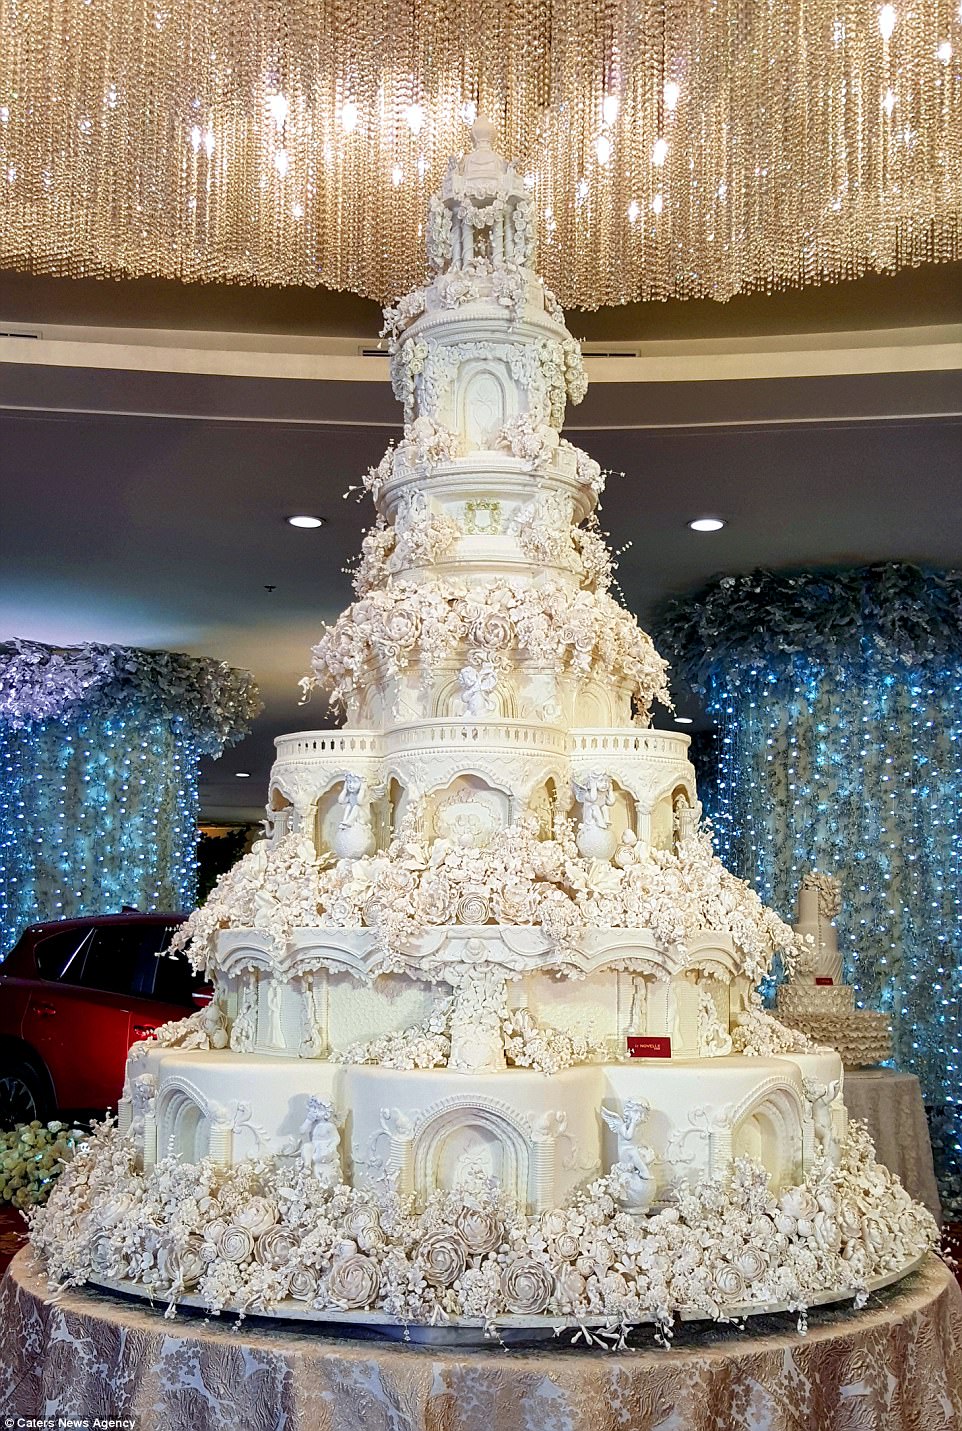 Elaborate Castle Wedding Cakes